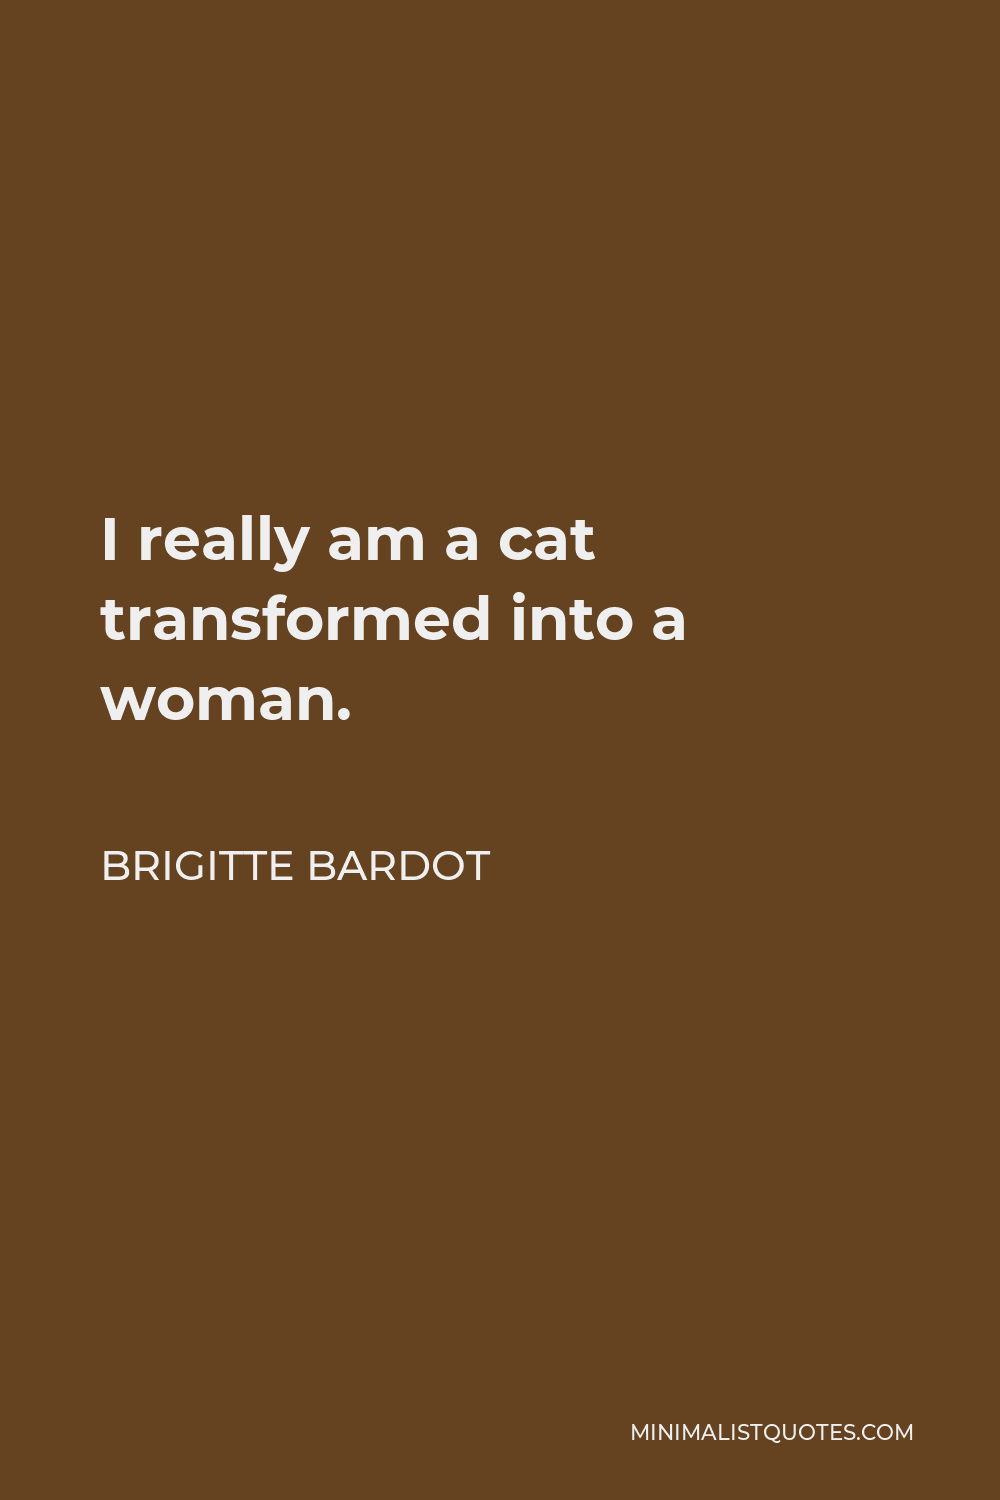 Brigitte Bardot Quote - I really am a cat transformed into a woman.